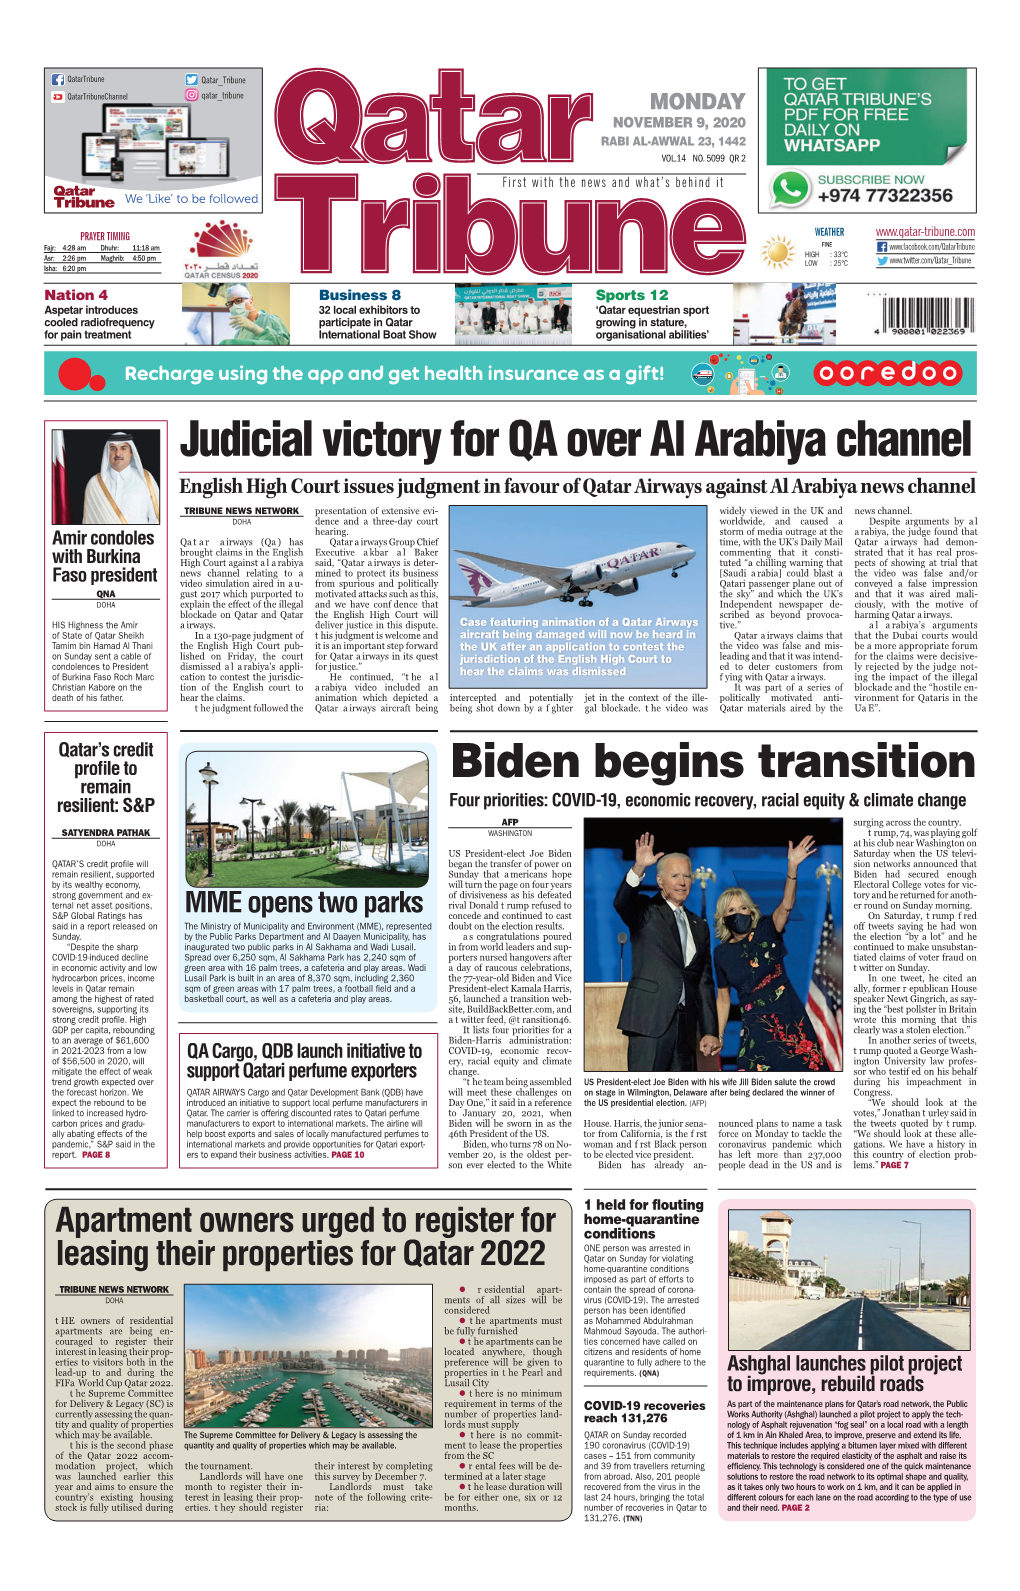 Judicial Victory for QA Over Al Arabiya Channel Biden Begins Transition